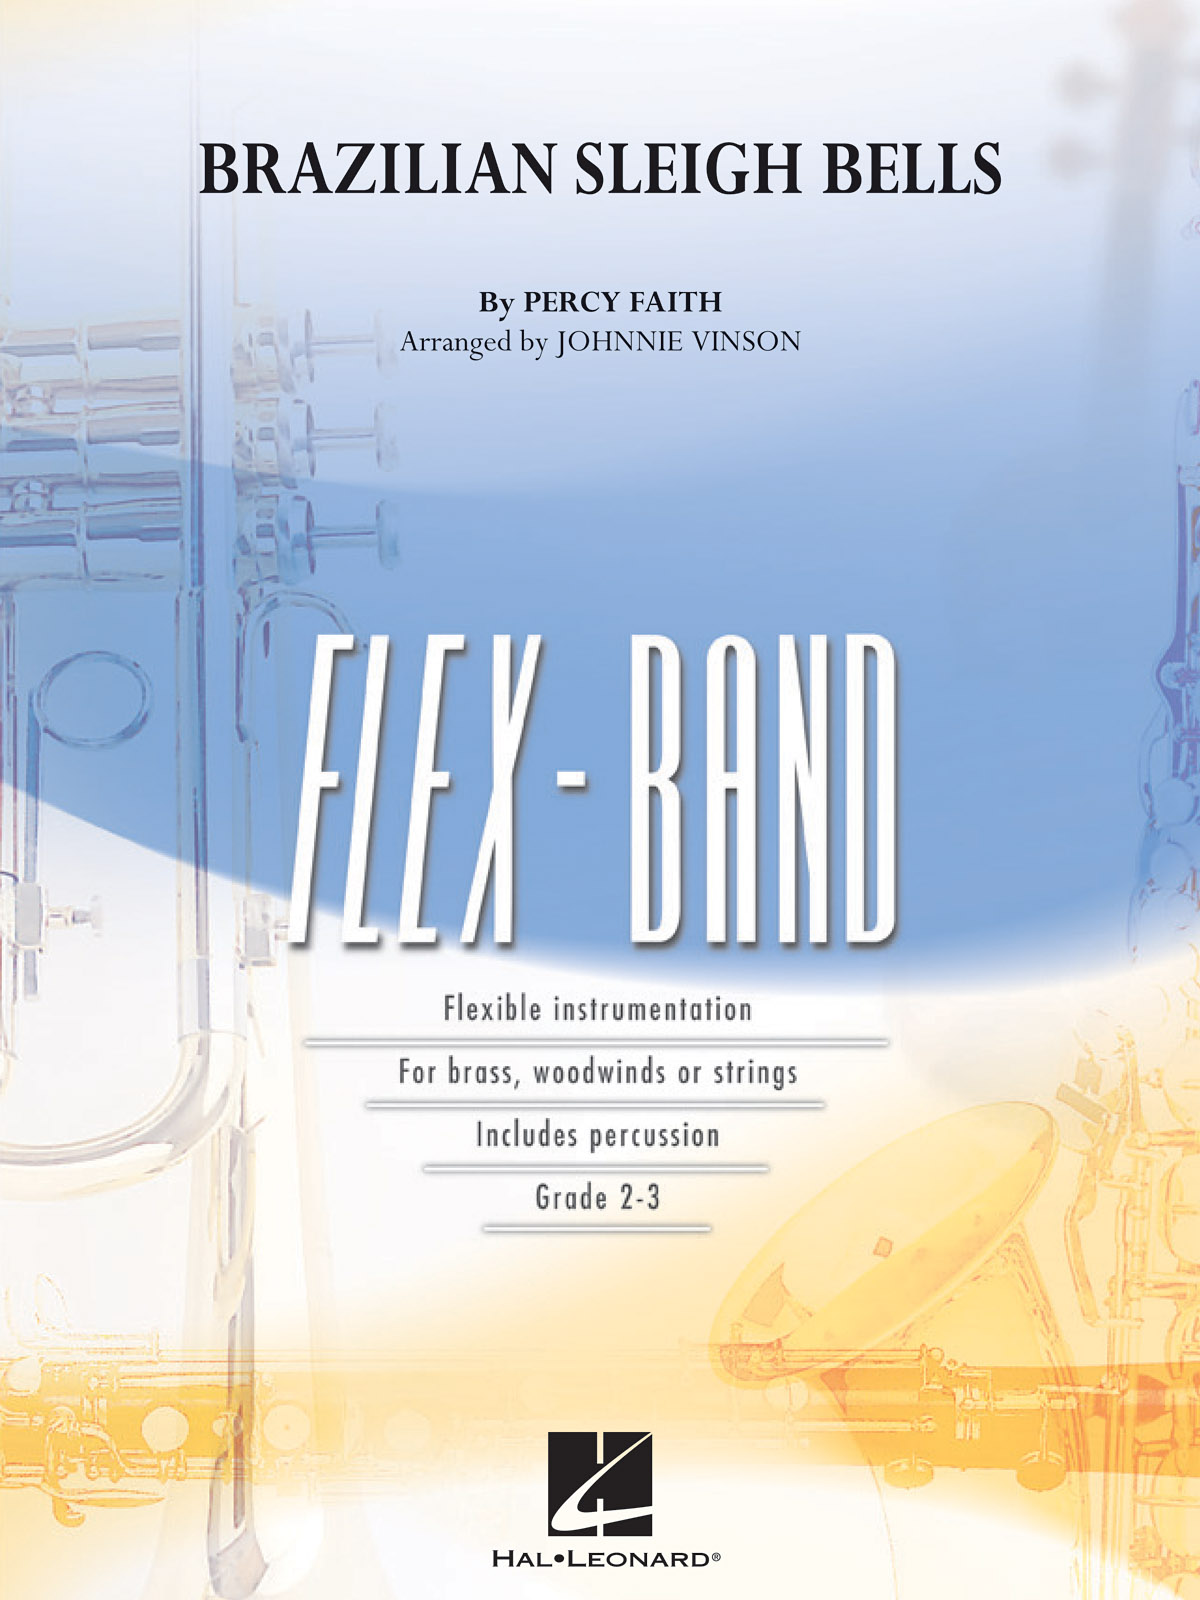 Percy Faith: Brazilian Sleigh Bells (Flexband)